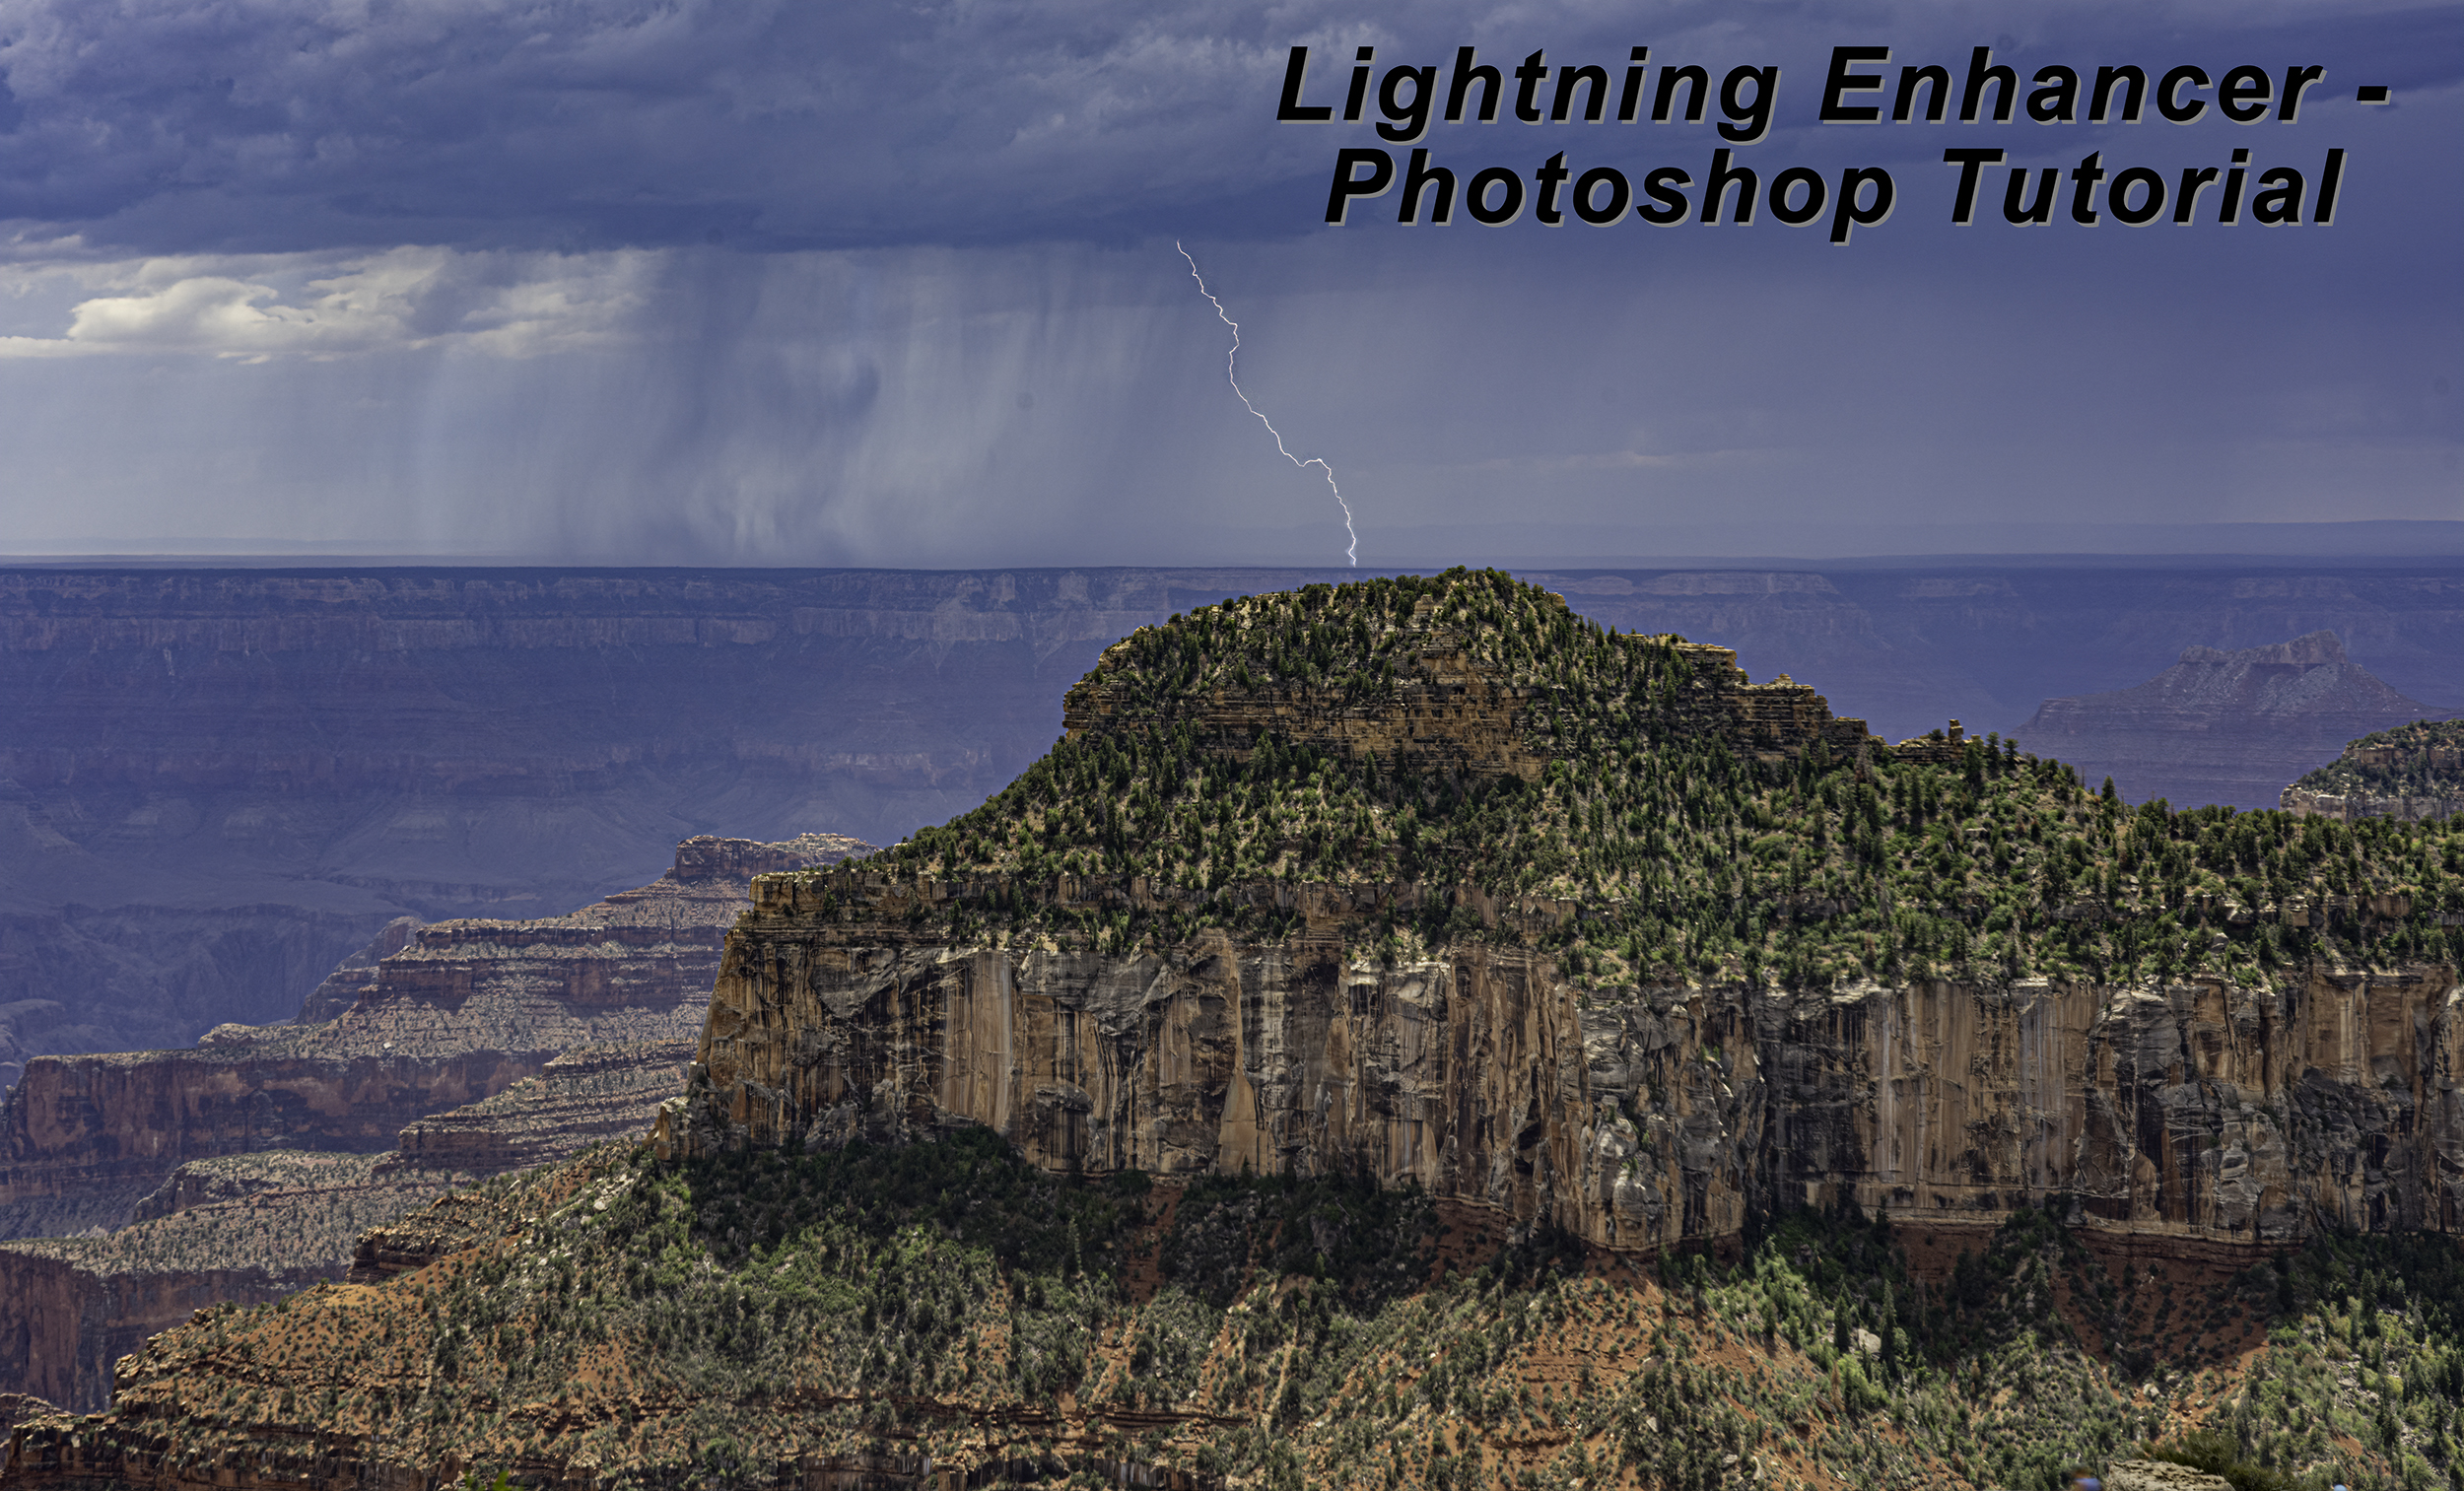 Lightning Enhancer Photoshop Tutorial